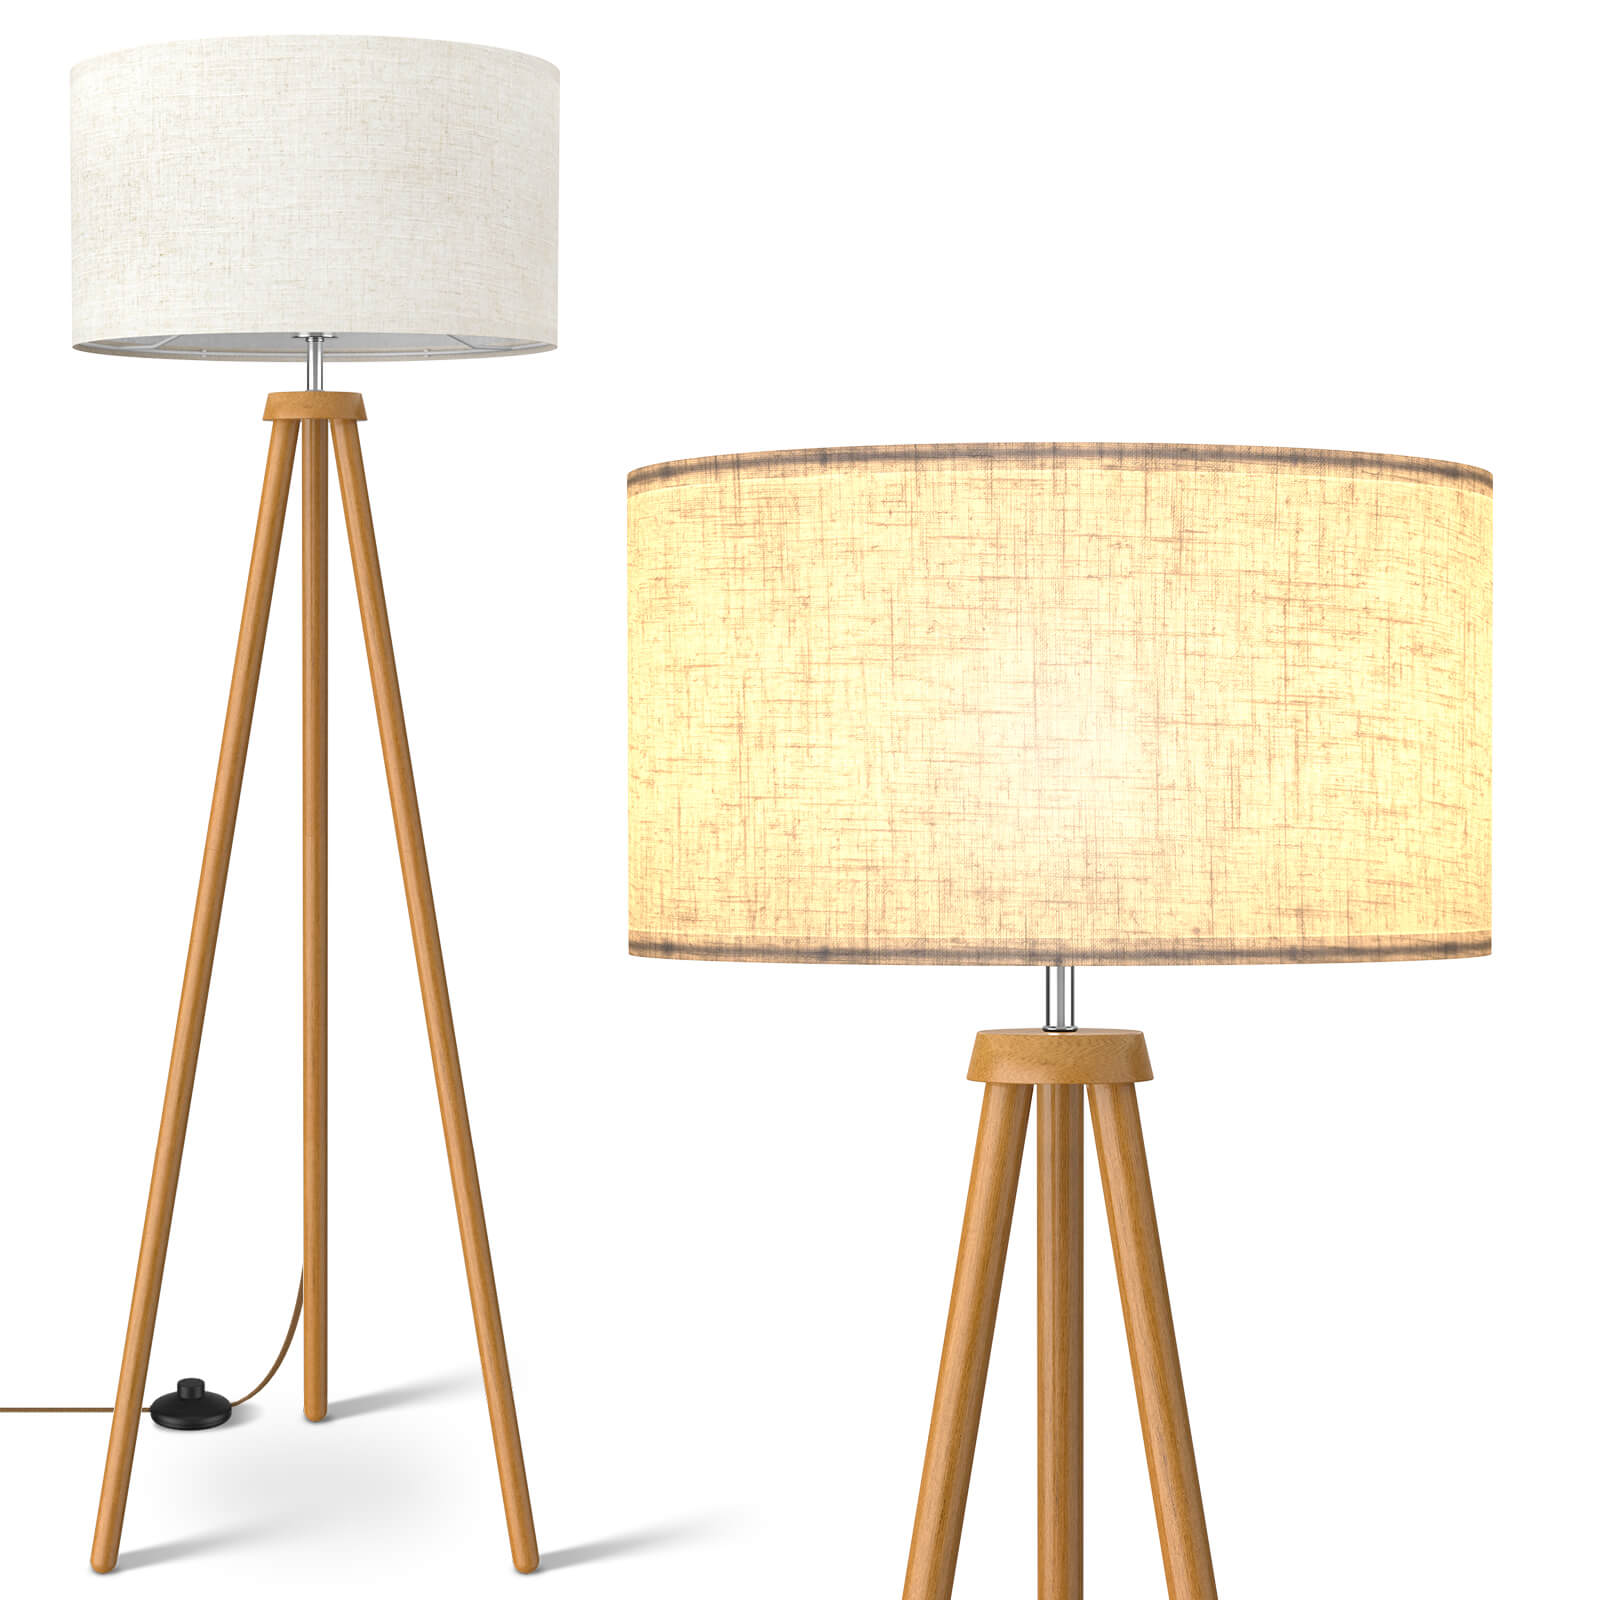 Wooden Tripod Floor Lamp, Modern Standing Lamp